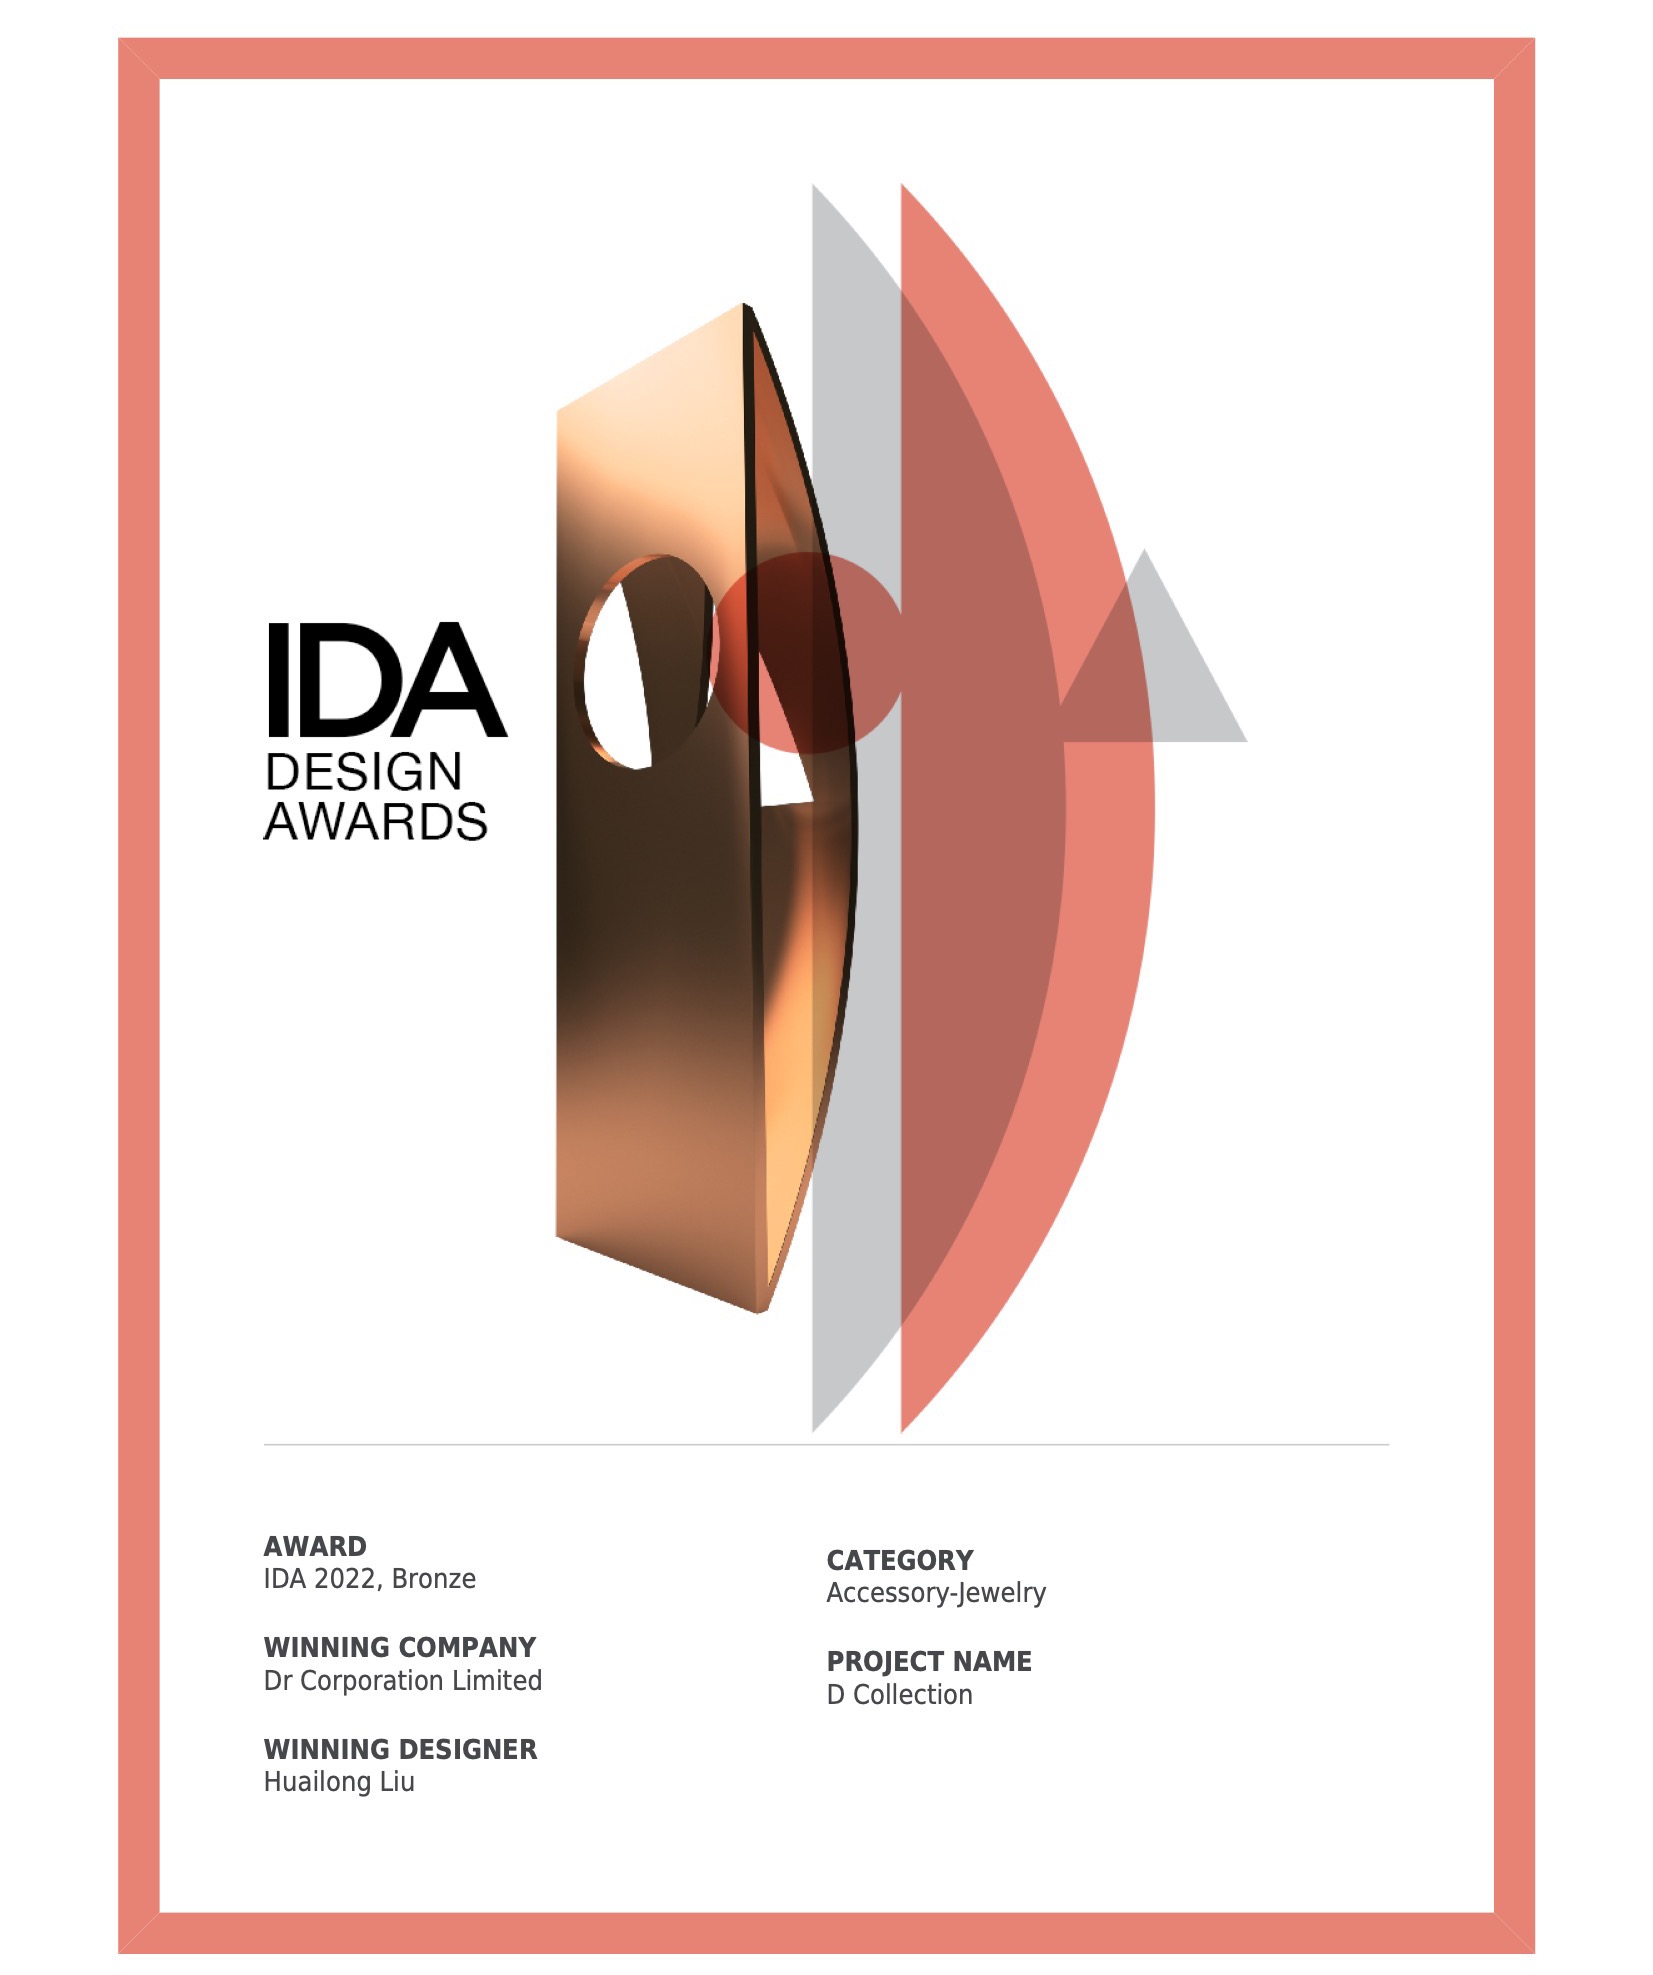 Darry Ring Wins IDA Design Awards